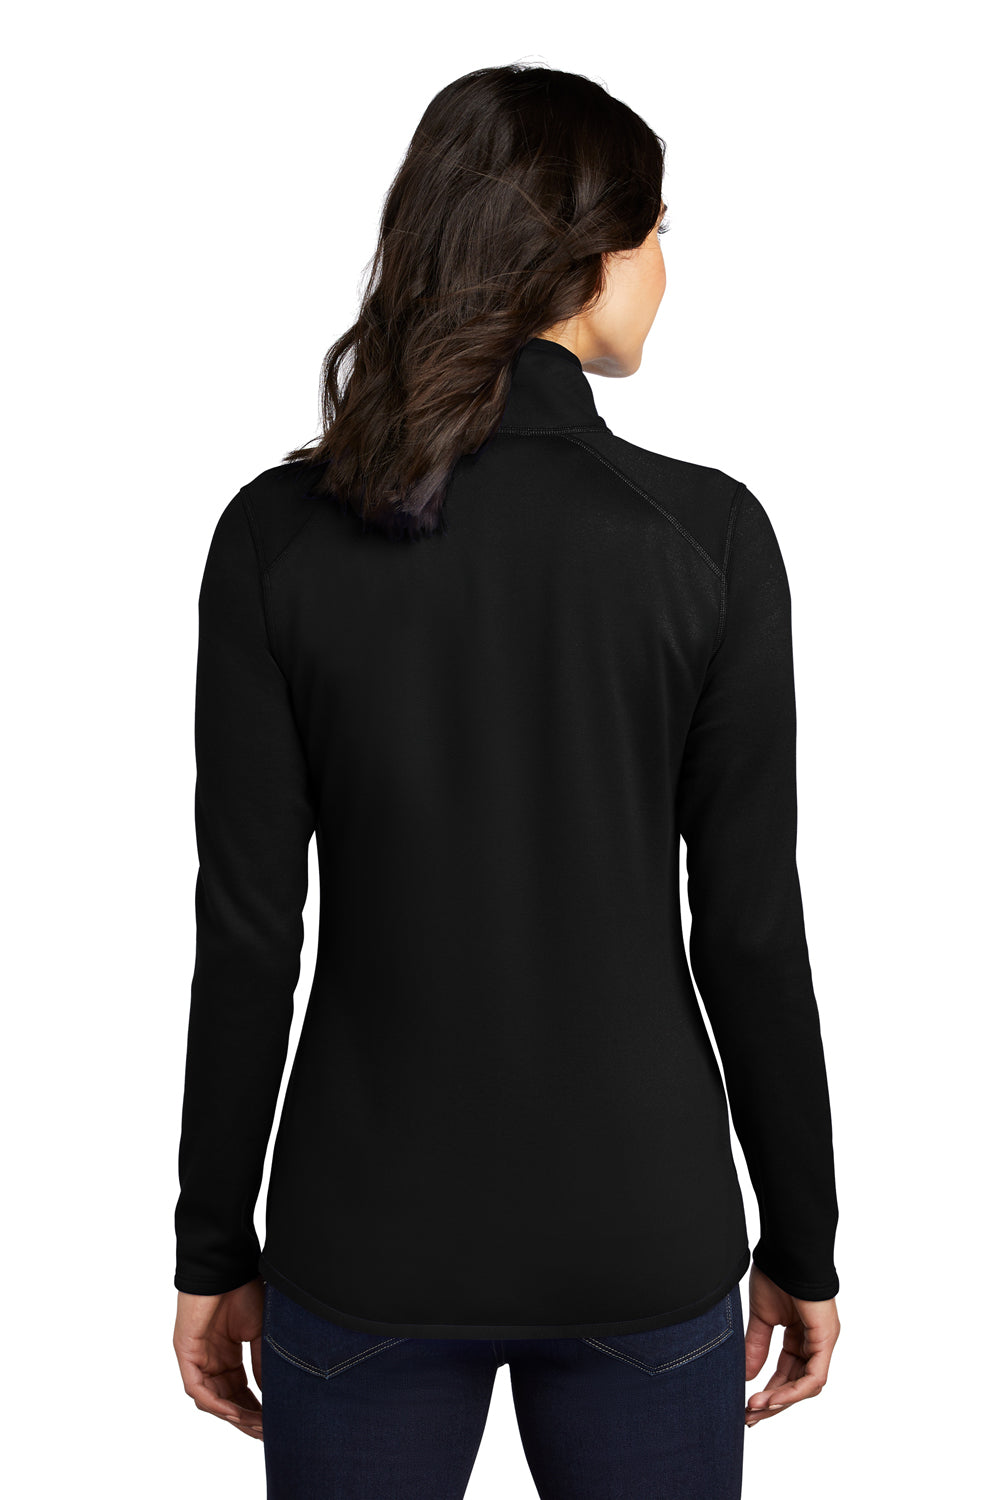 The North Face NF0A7V62 Womens Skyline Full Zip Fleece Jacket Black Back